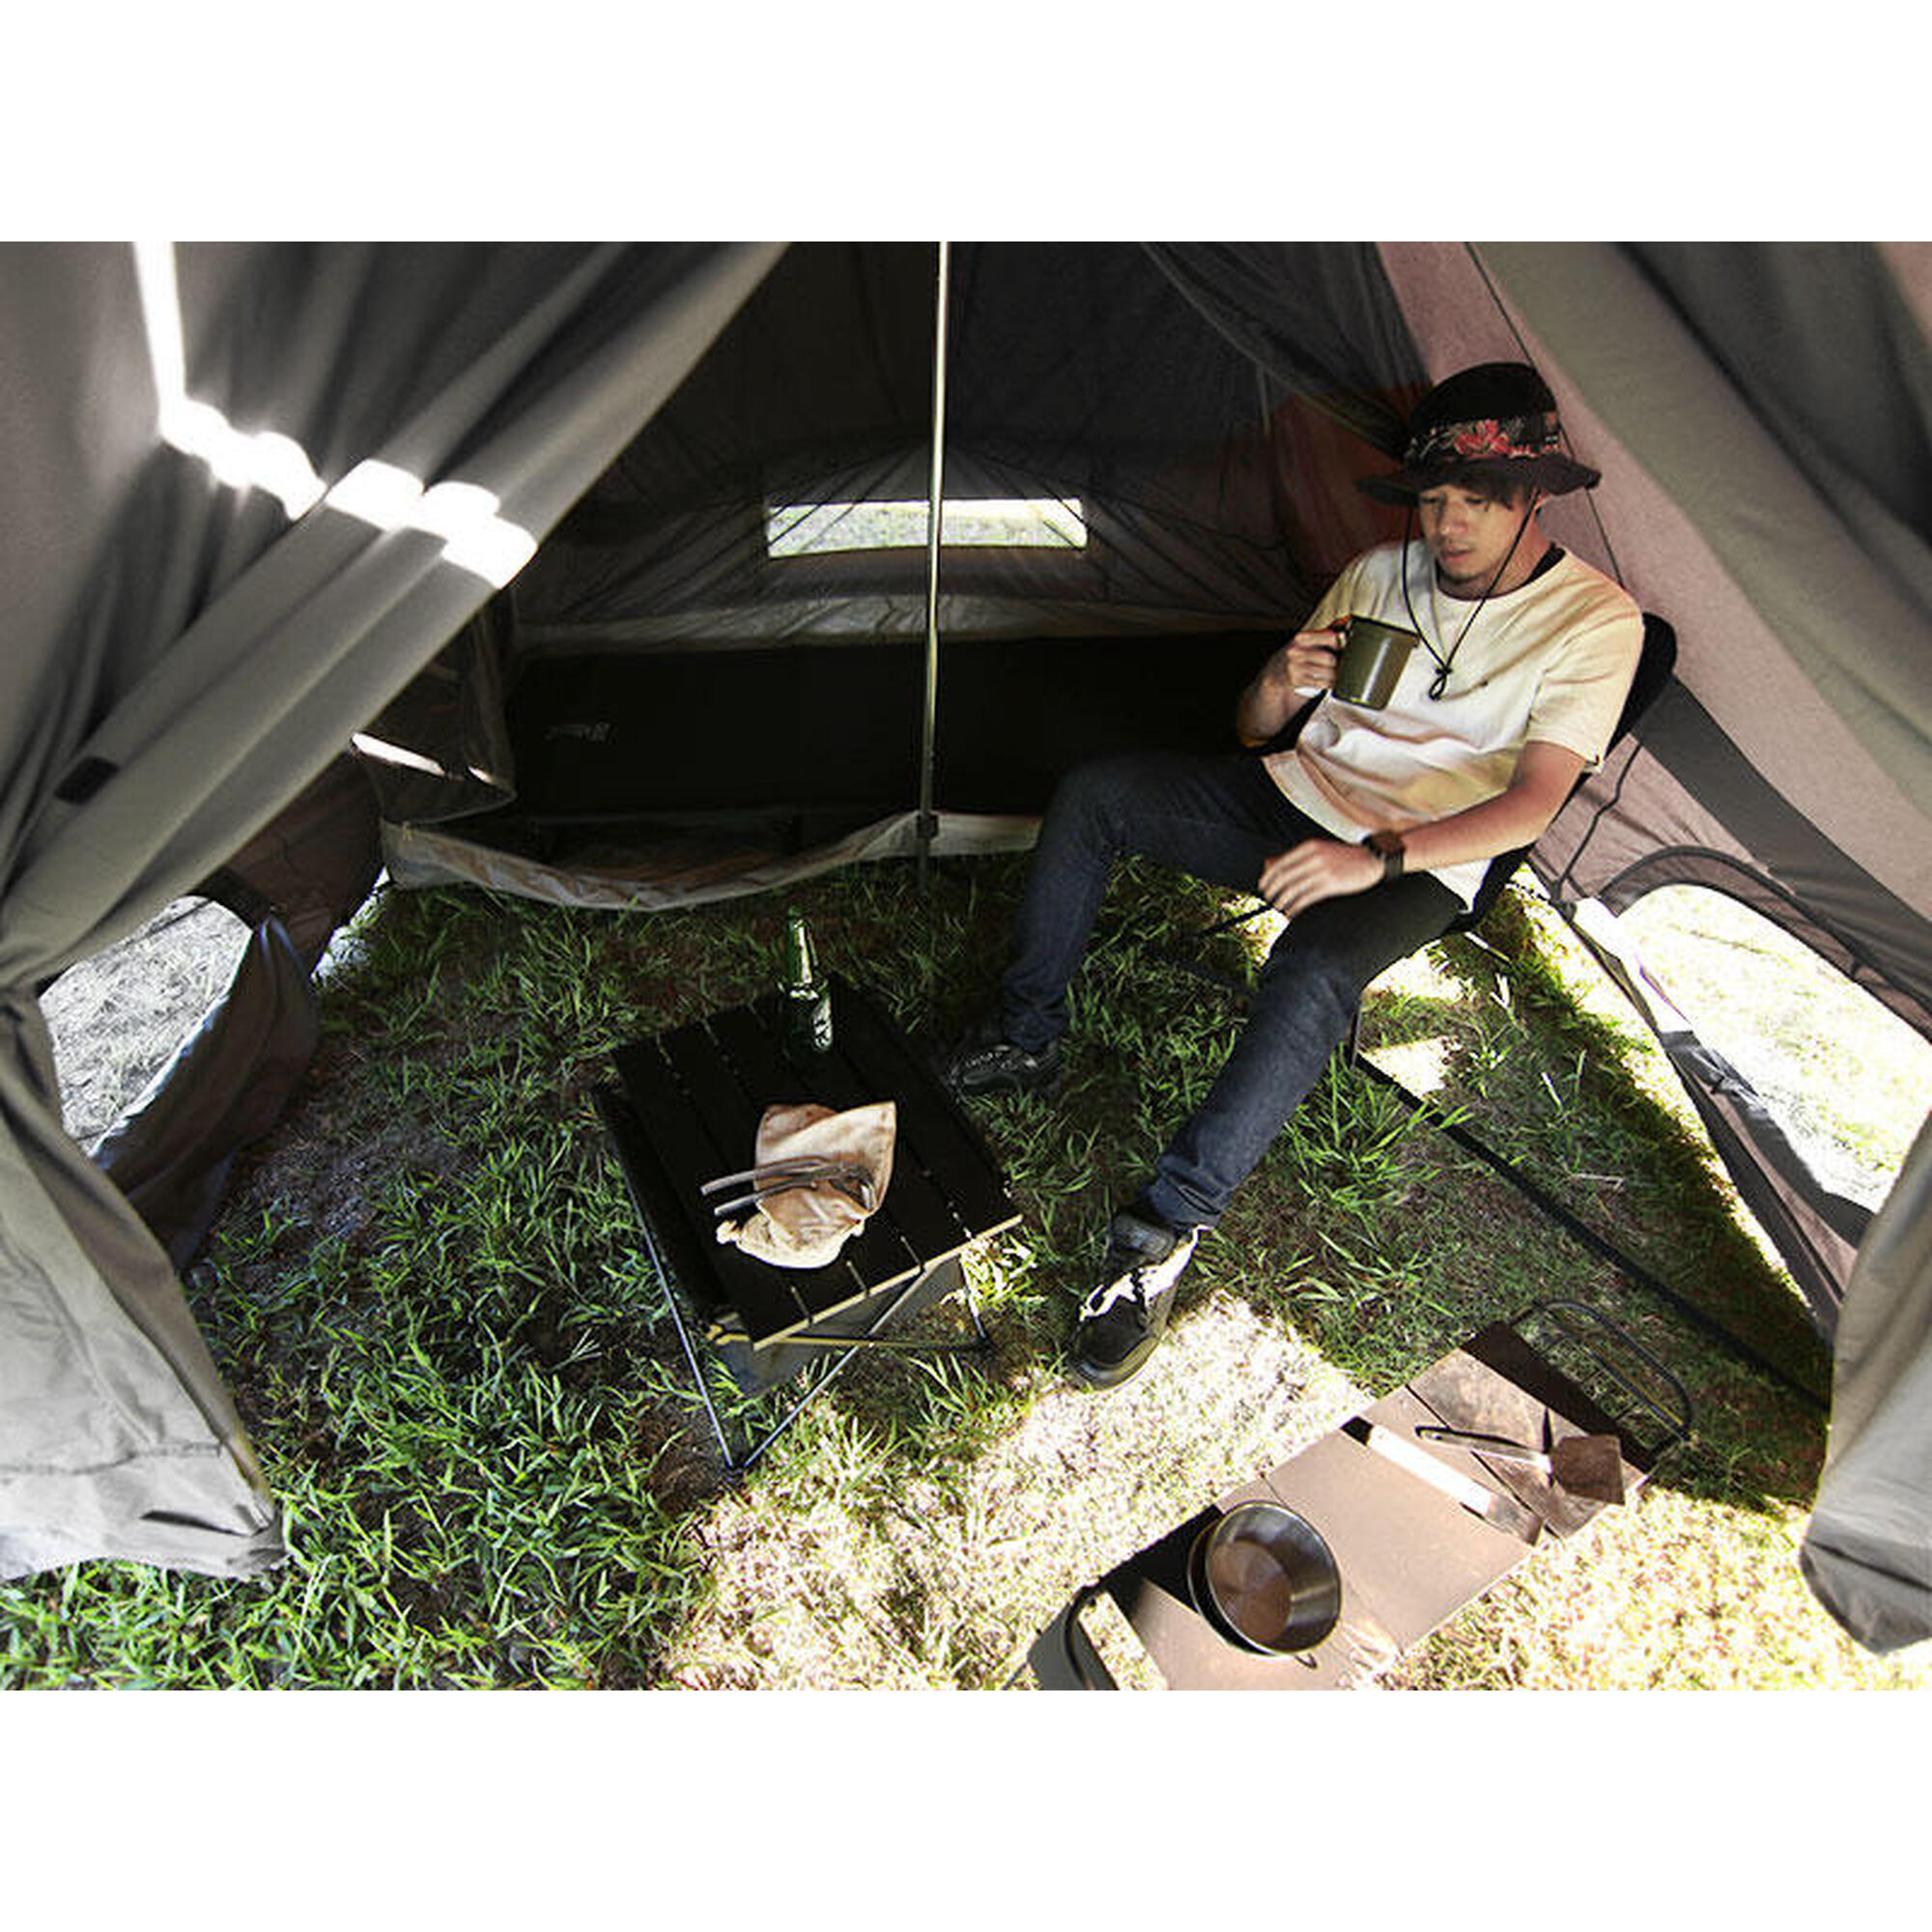 Shonen TC T1-757-GY 1 Person Camping Tent - Grey